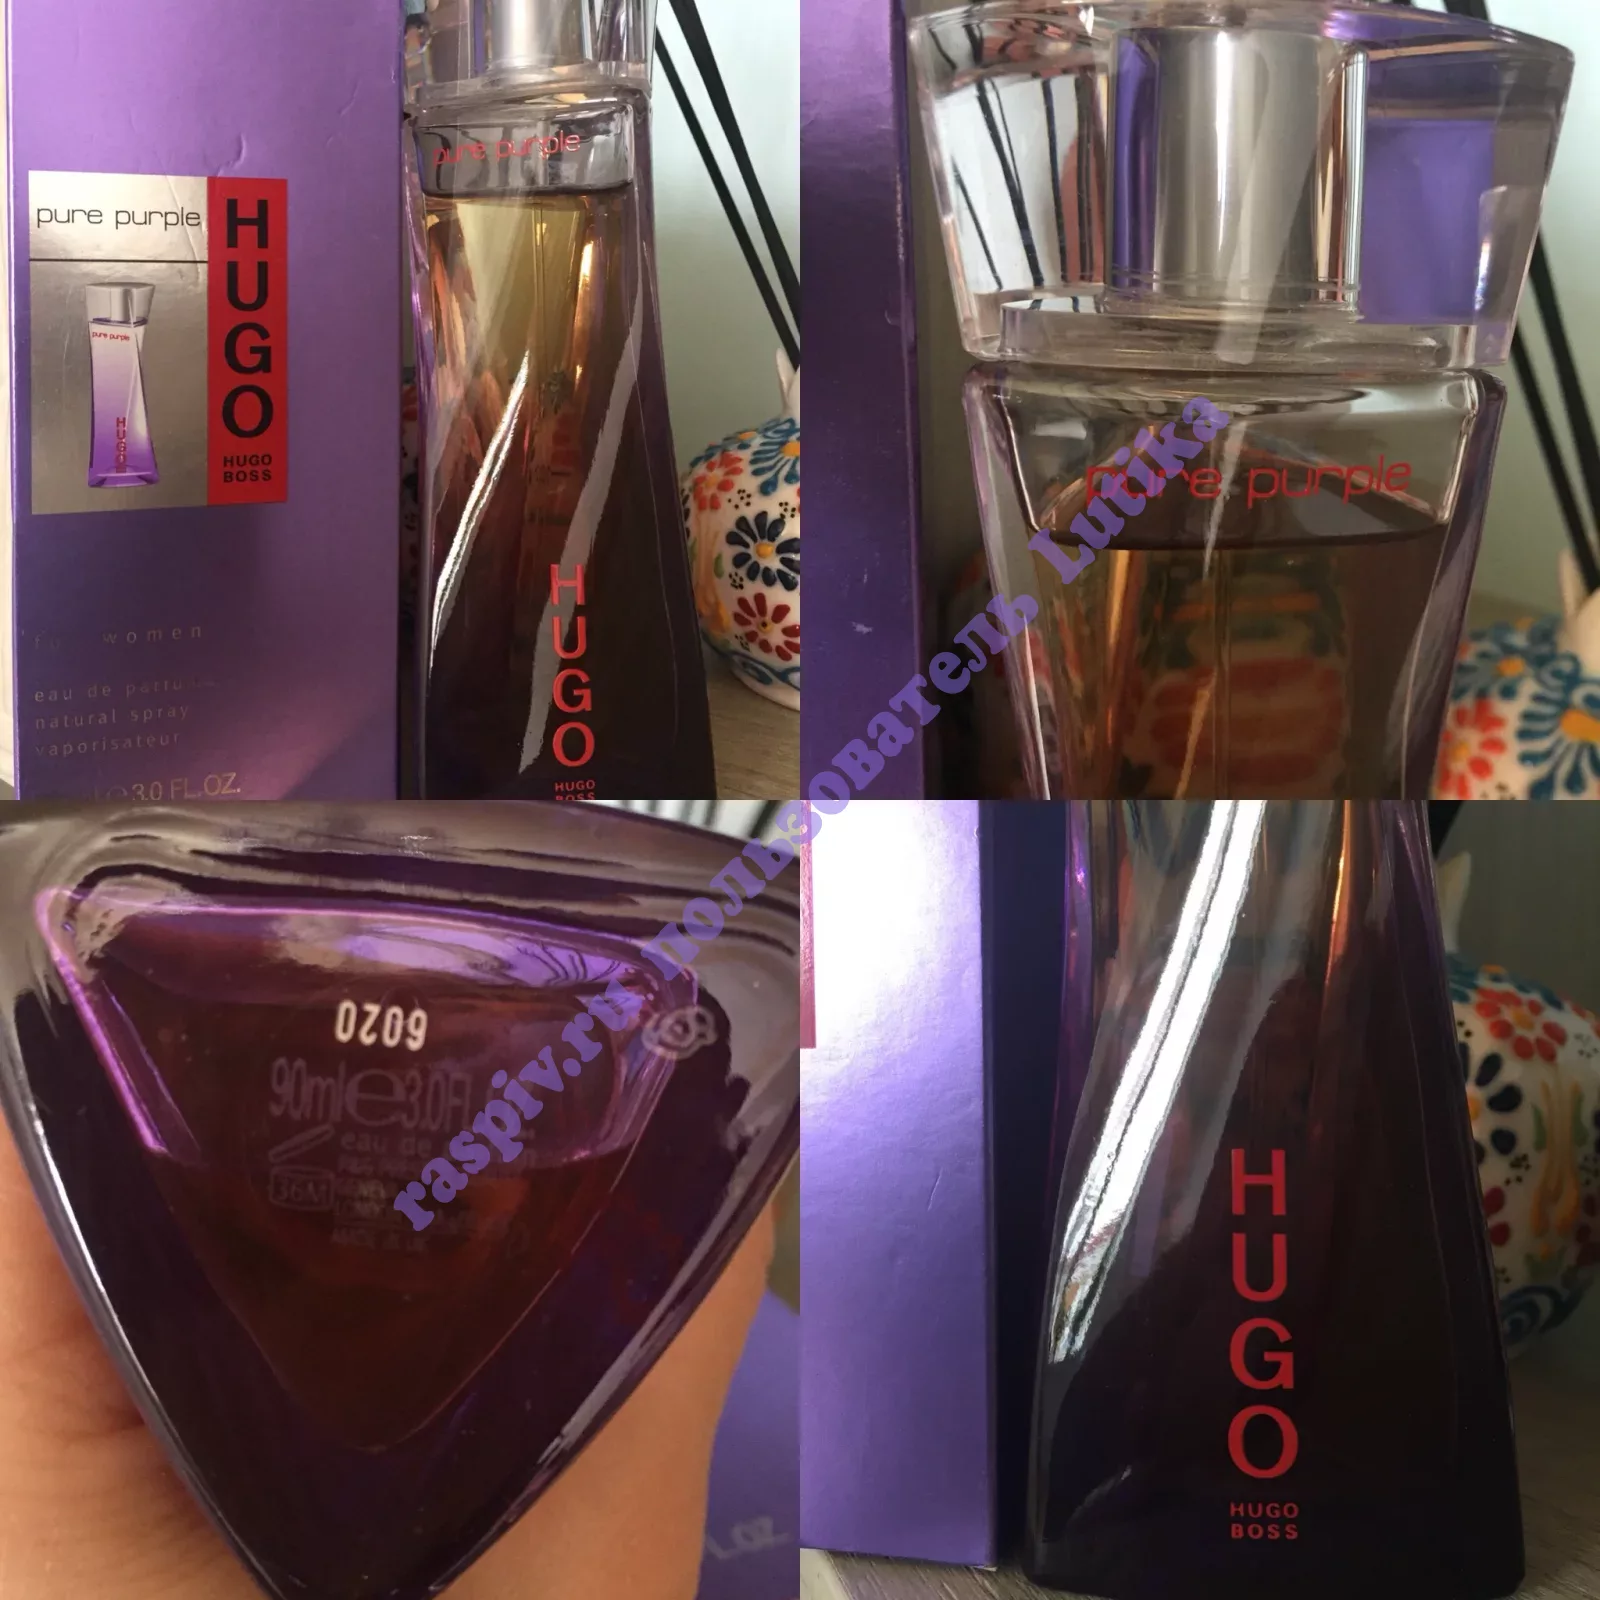 Hugo pure. Hugo Pure Purple (Hugo Boss) 100мл. Pure Purple Boss 30 ml. Hugo Boss Pure Purple набор. Отливант Hugo Boss.